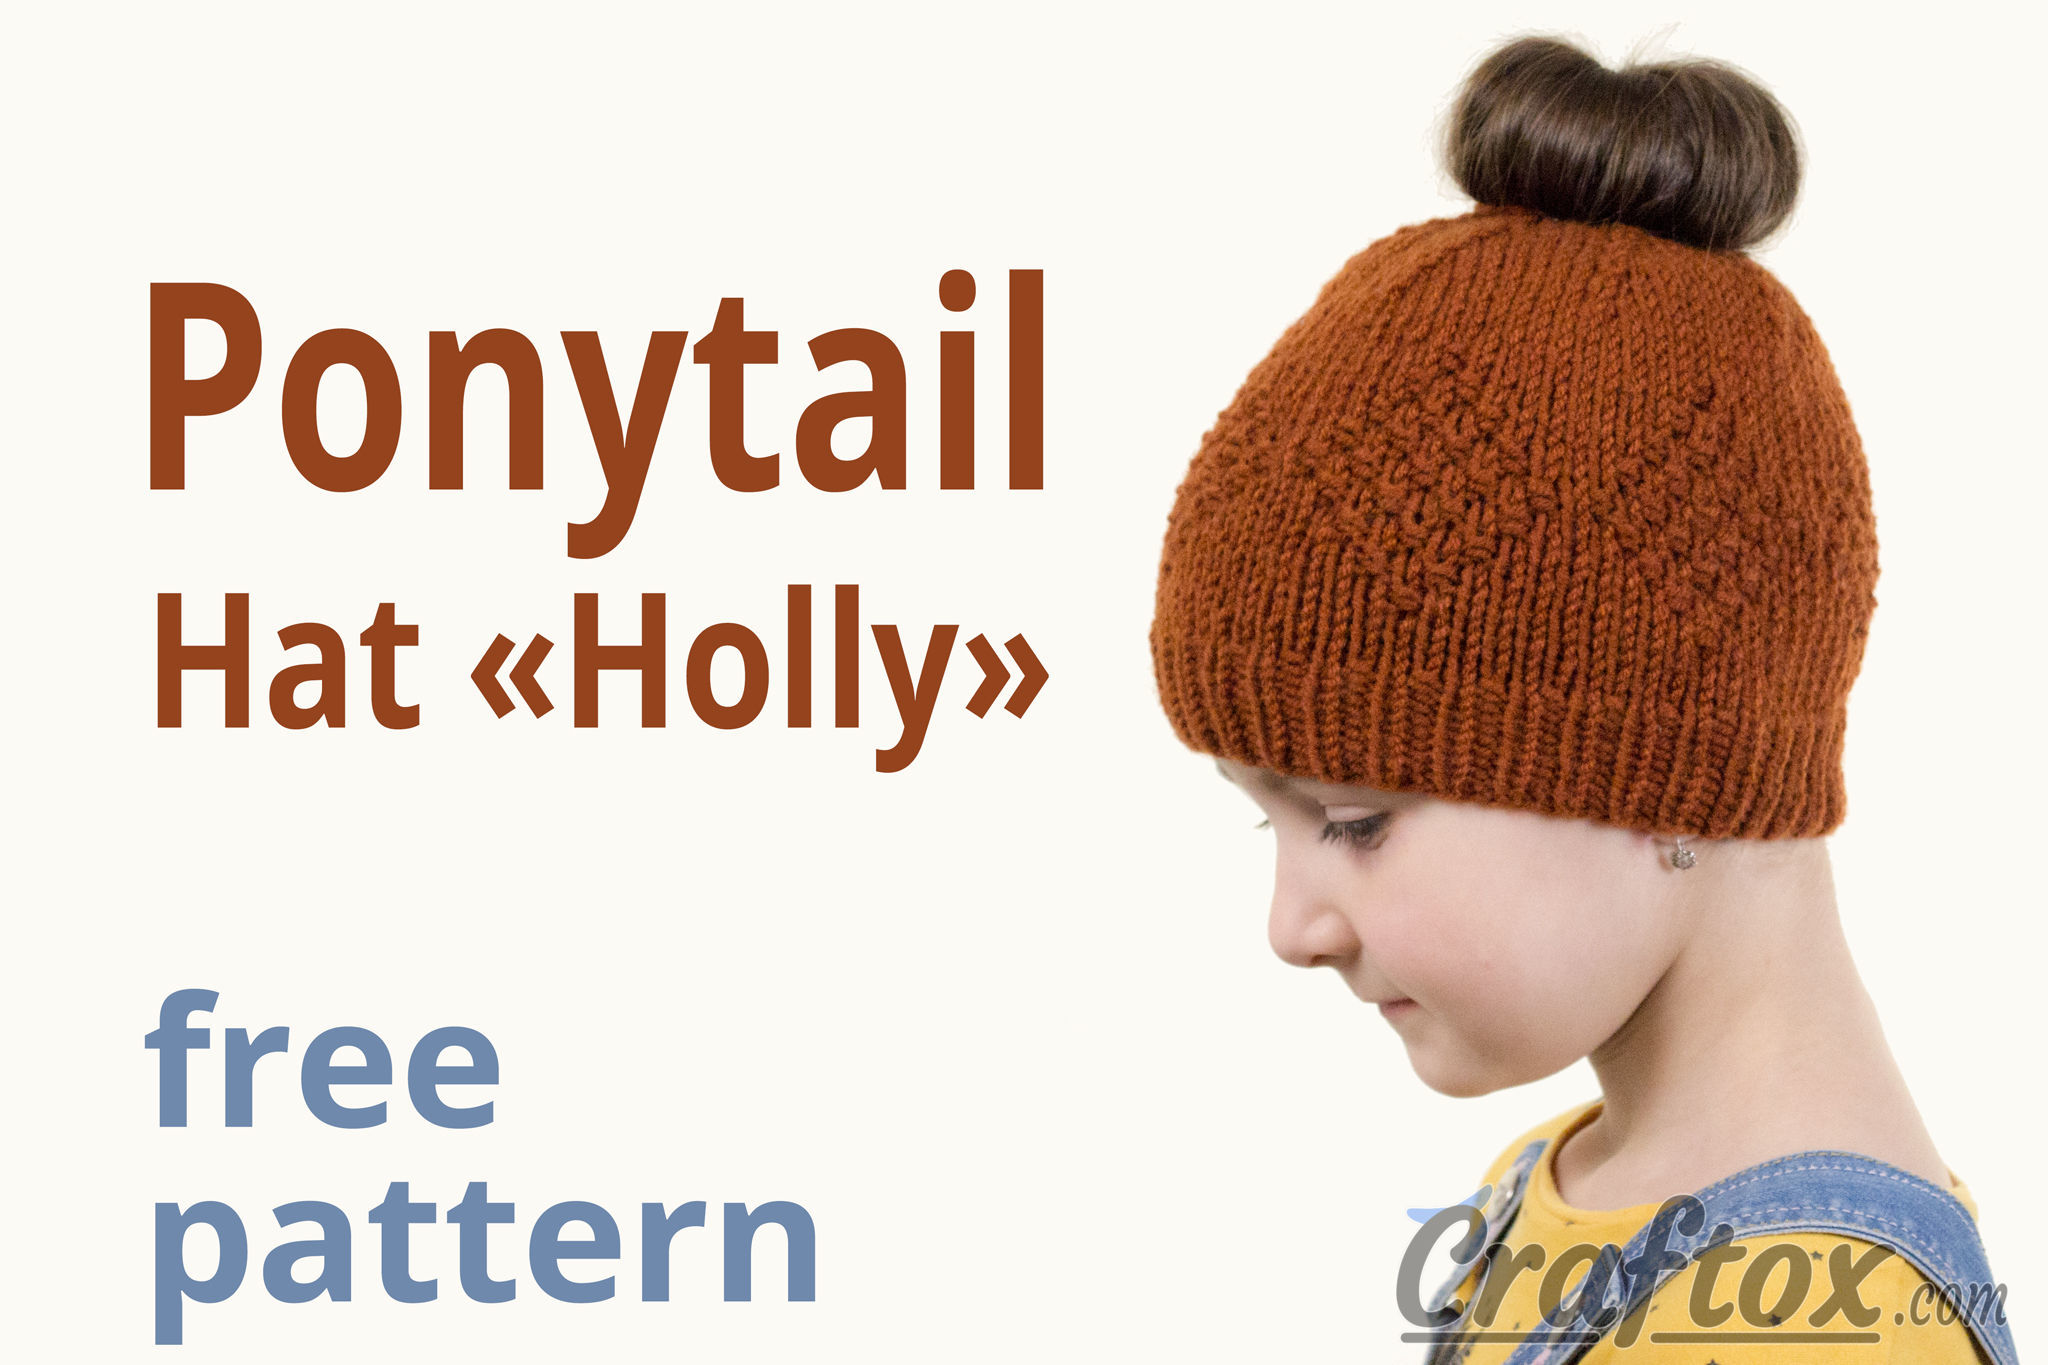 Ponytail hat "Holly" free knitting pattern.